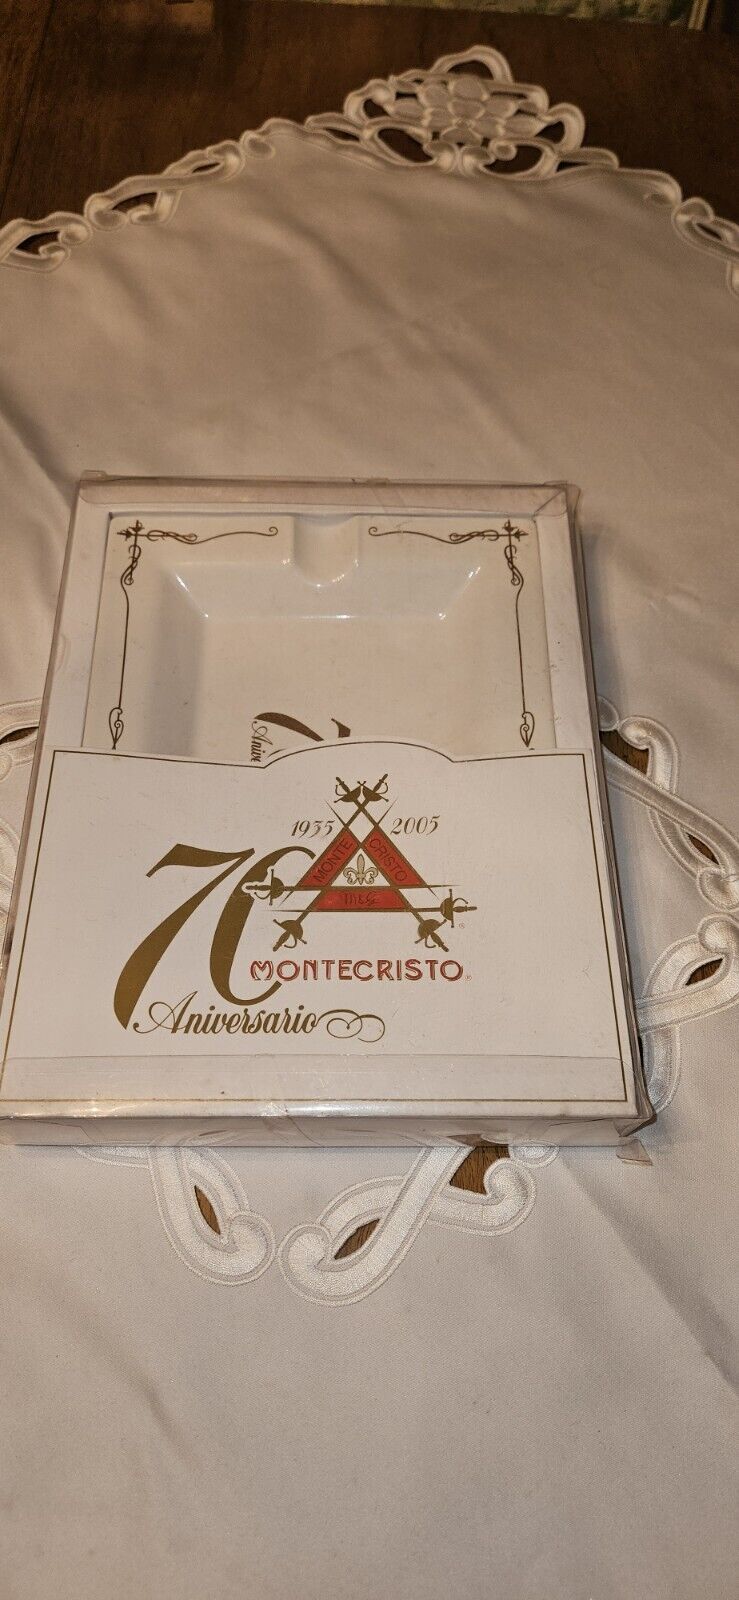 Large Porcelain -Vintage 70th 1935-2005 Aniversario-Montecristo -Cigar Ashtray